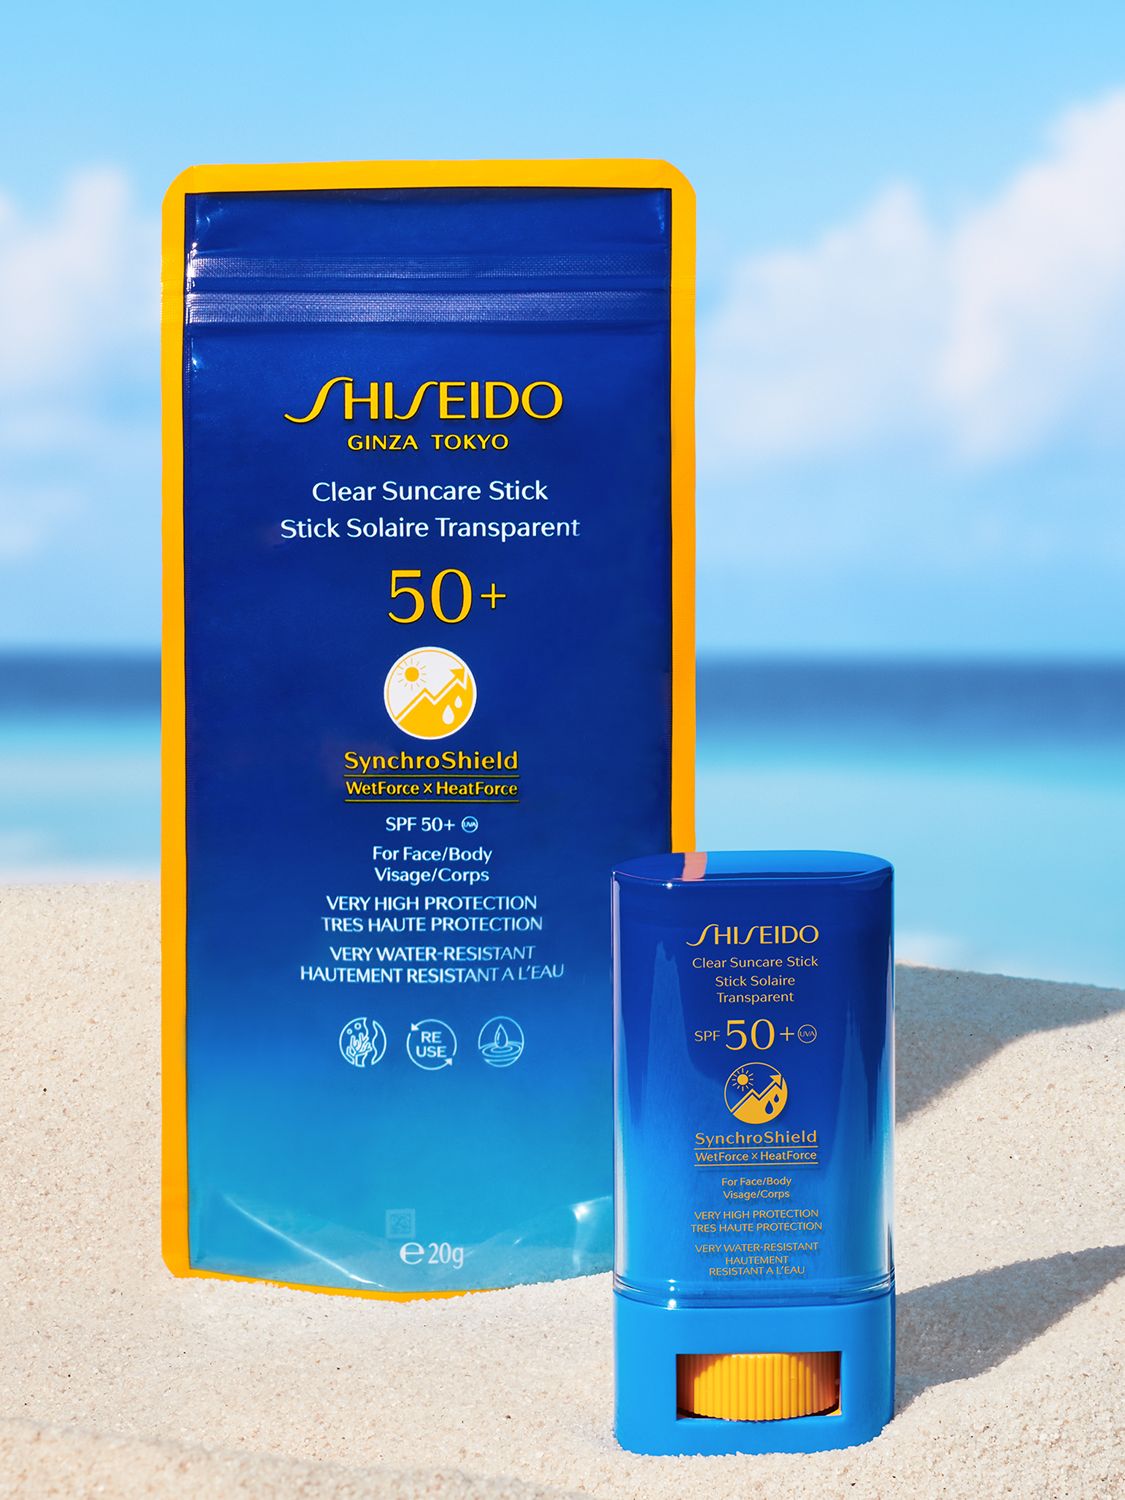 Shiseido Clear Suncare Stick SPF 50+, 20g